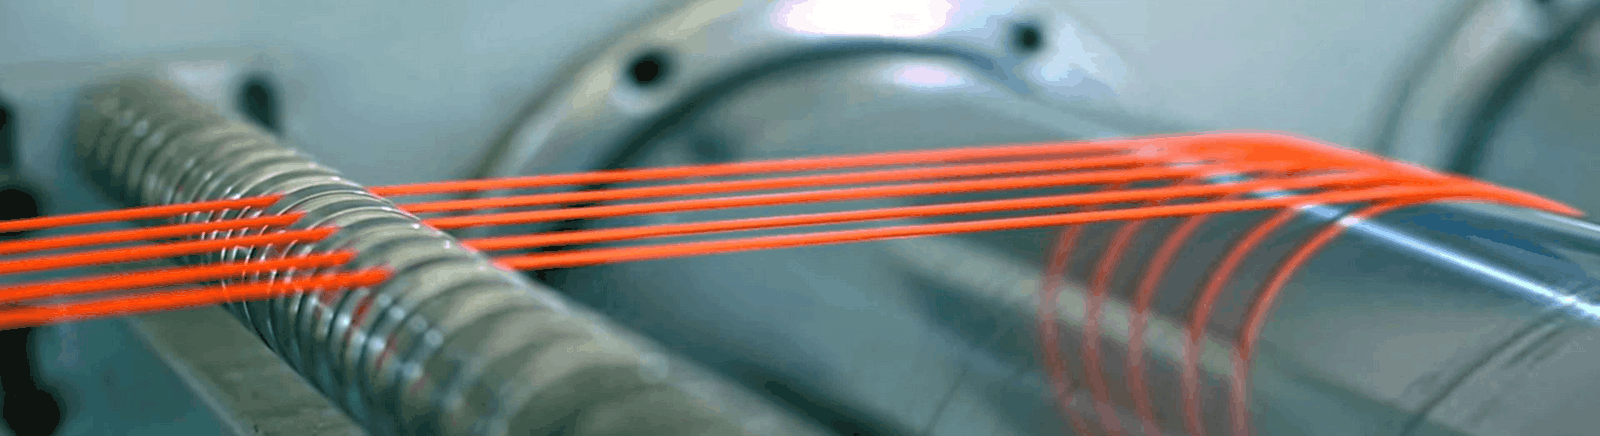 Dyreex tennis string factory